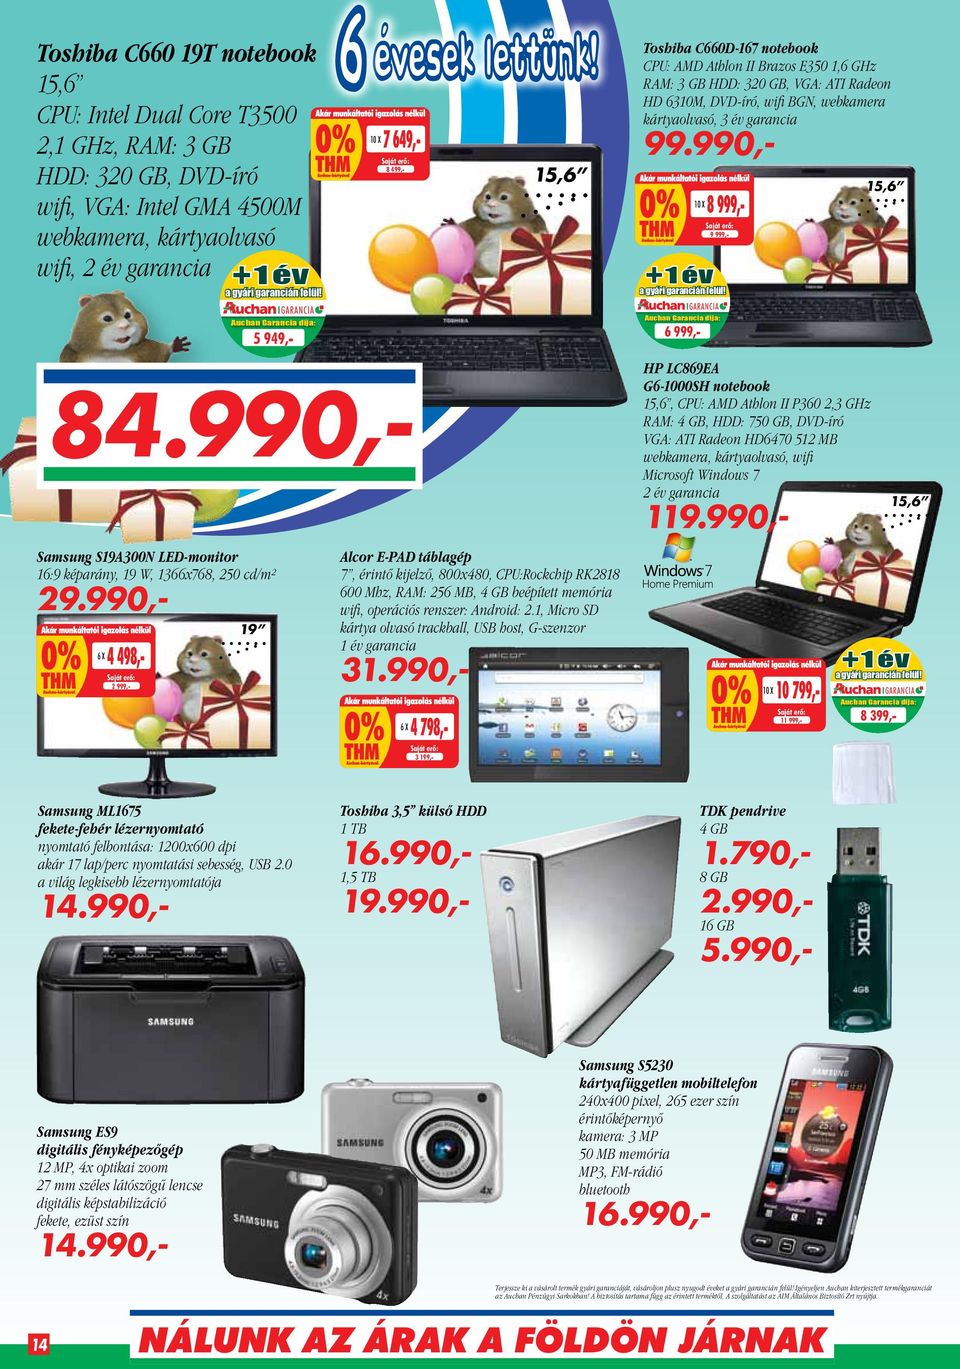 990-19 5 949- Samsung S19A300N LED-monitor 19 képarány 19 W 13x78 250 cd/m² 29.